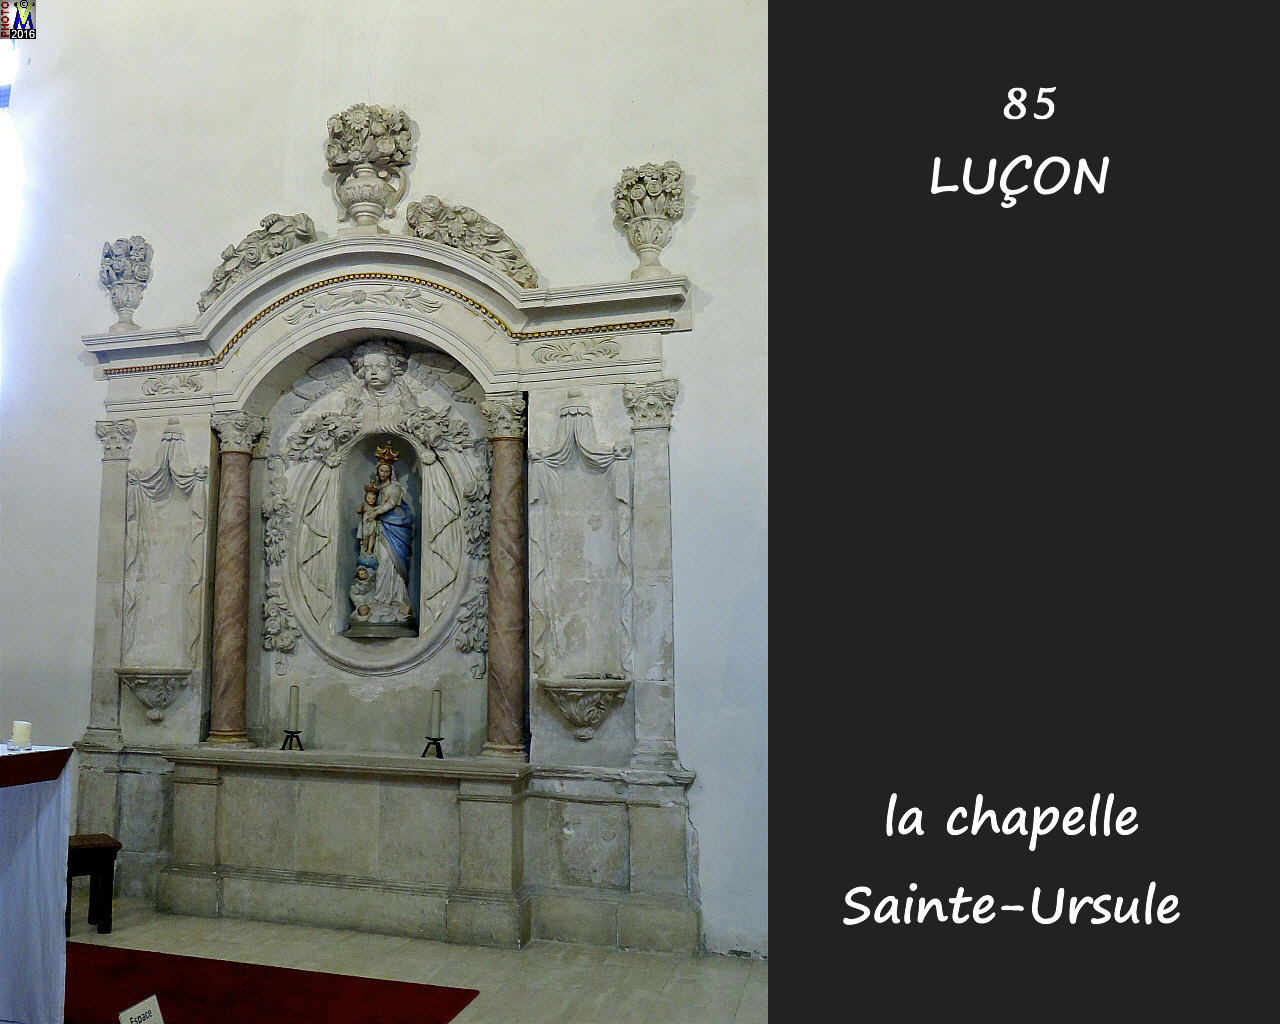 85LUCON_chapelle-ursule_1234.jpg